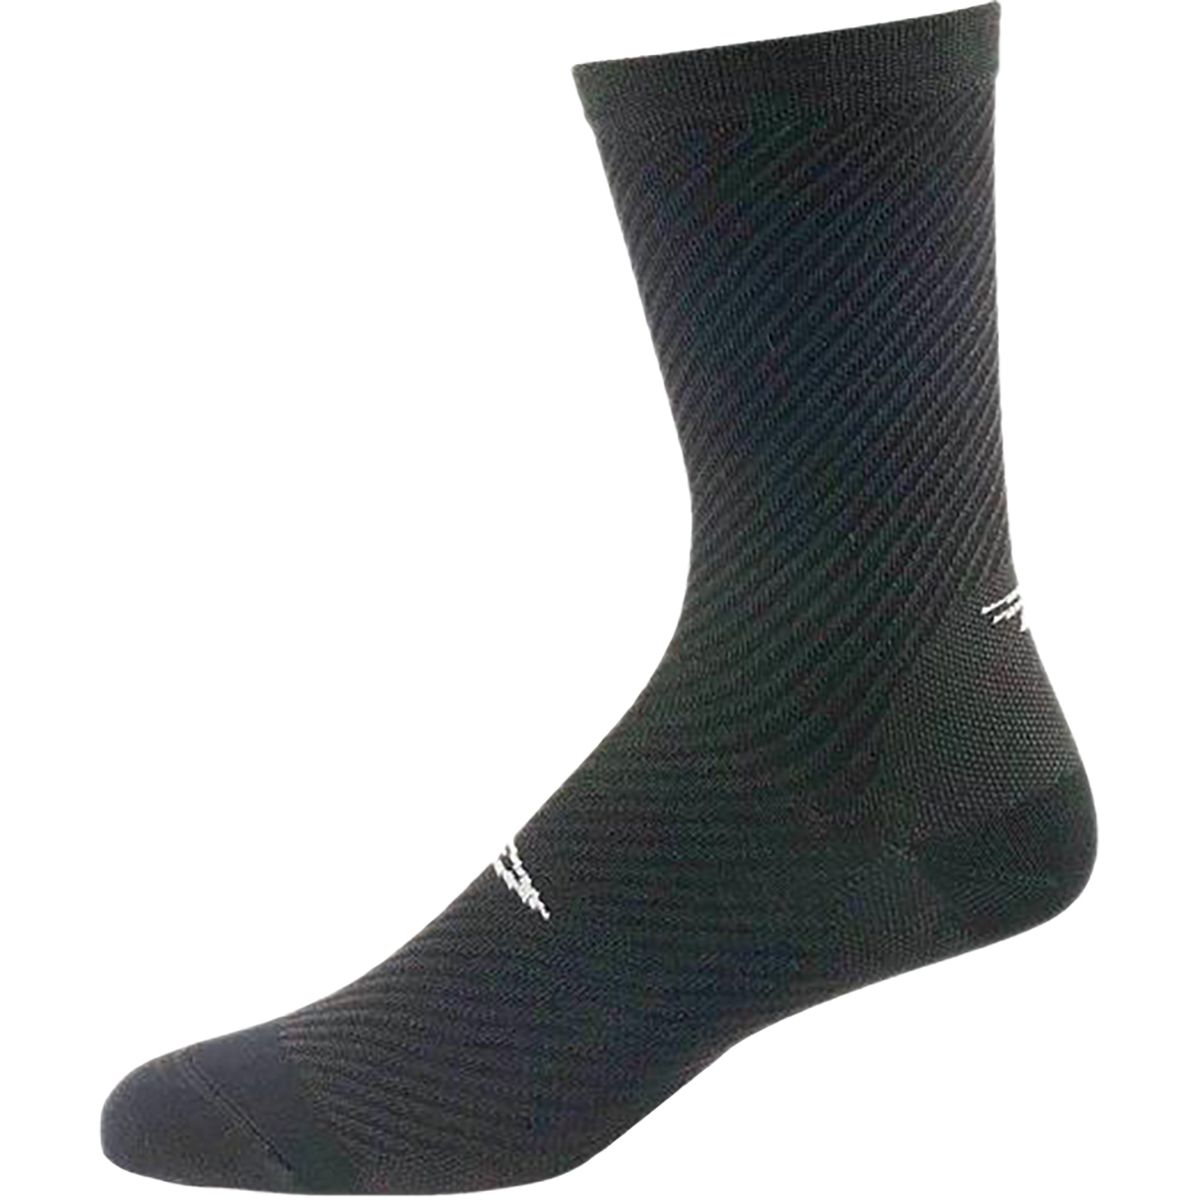 DeFeet Evo Carbon Sock - Men's